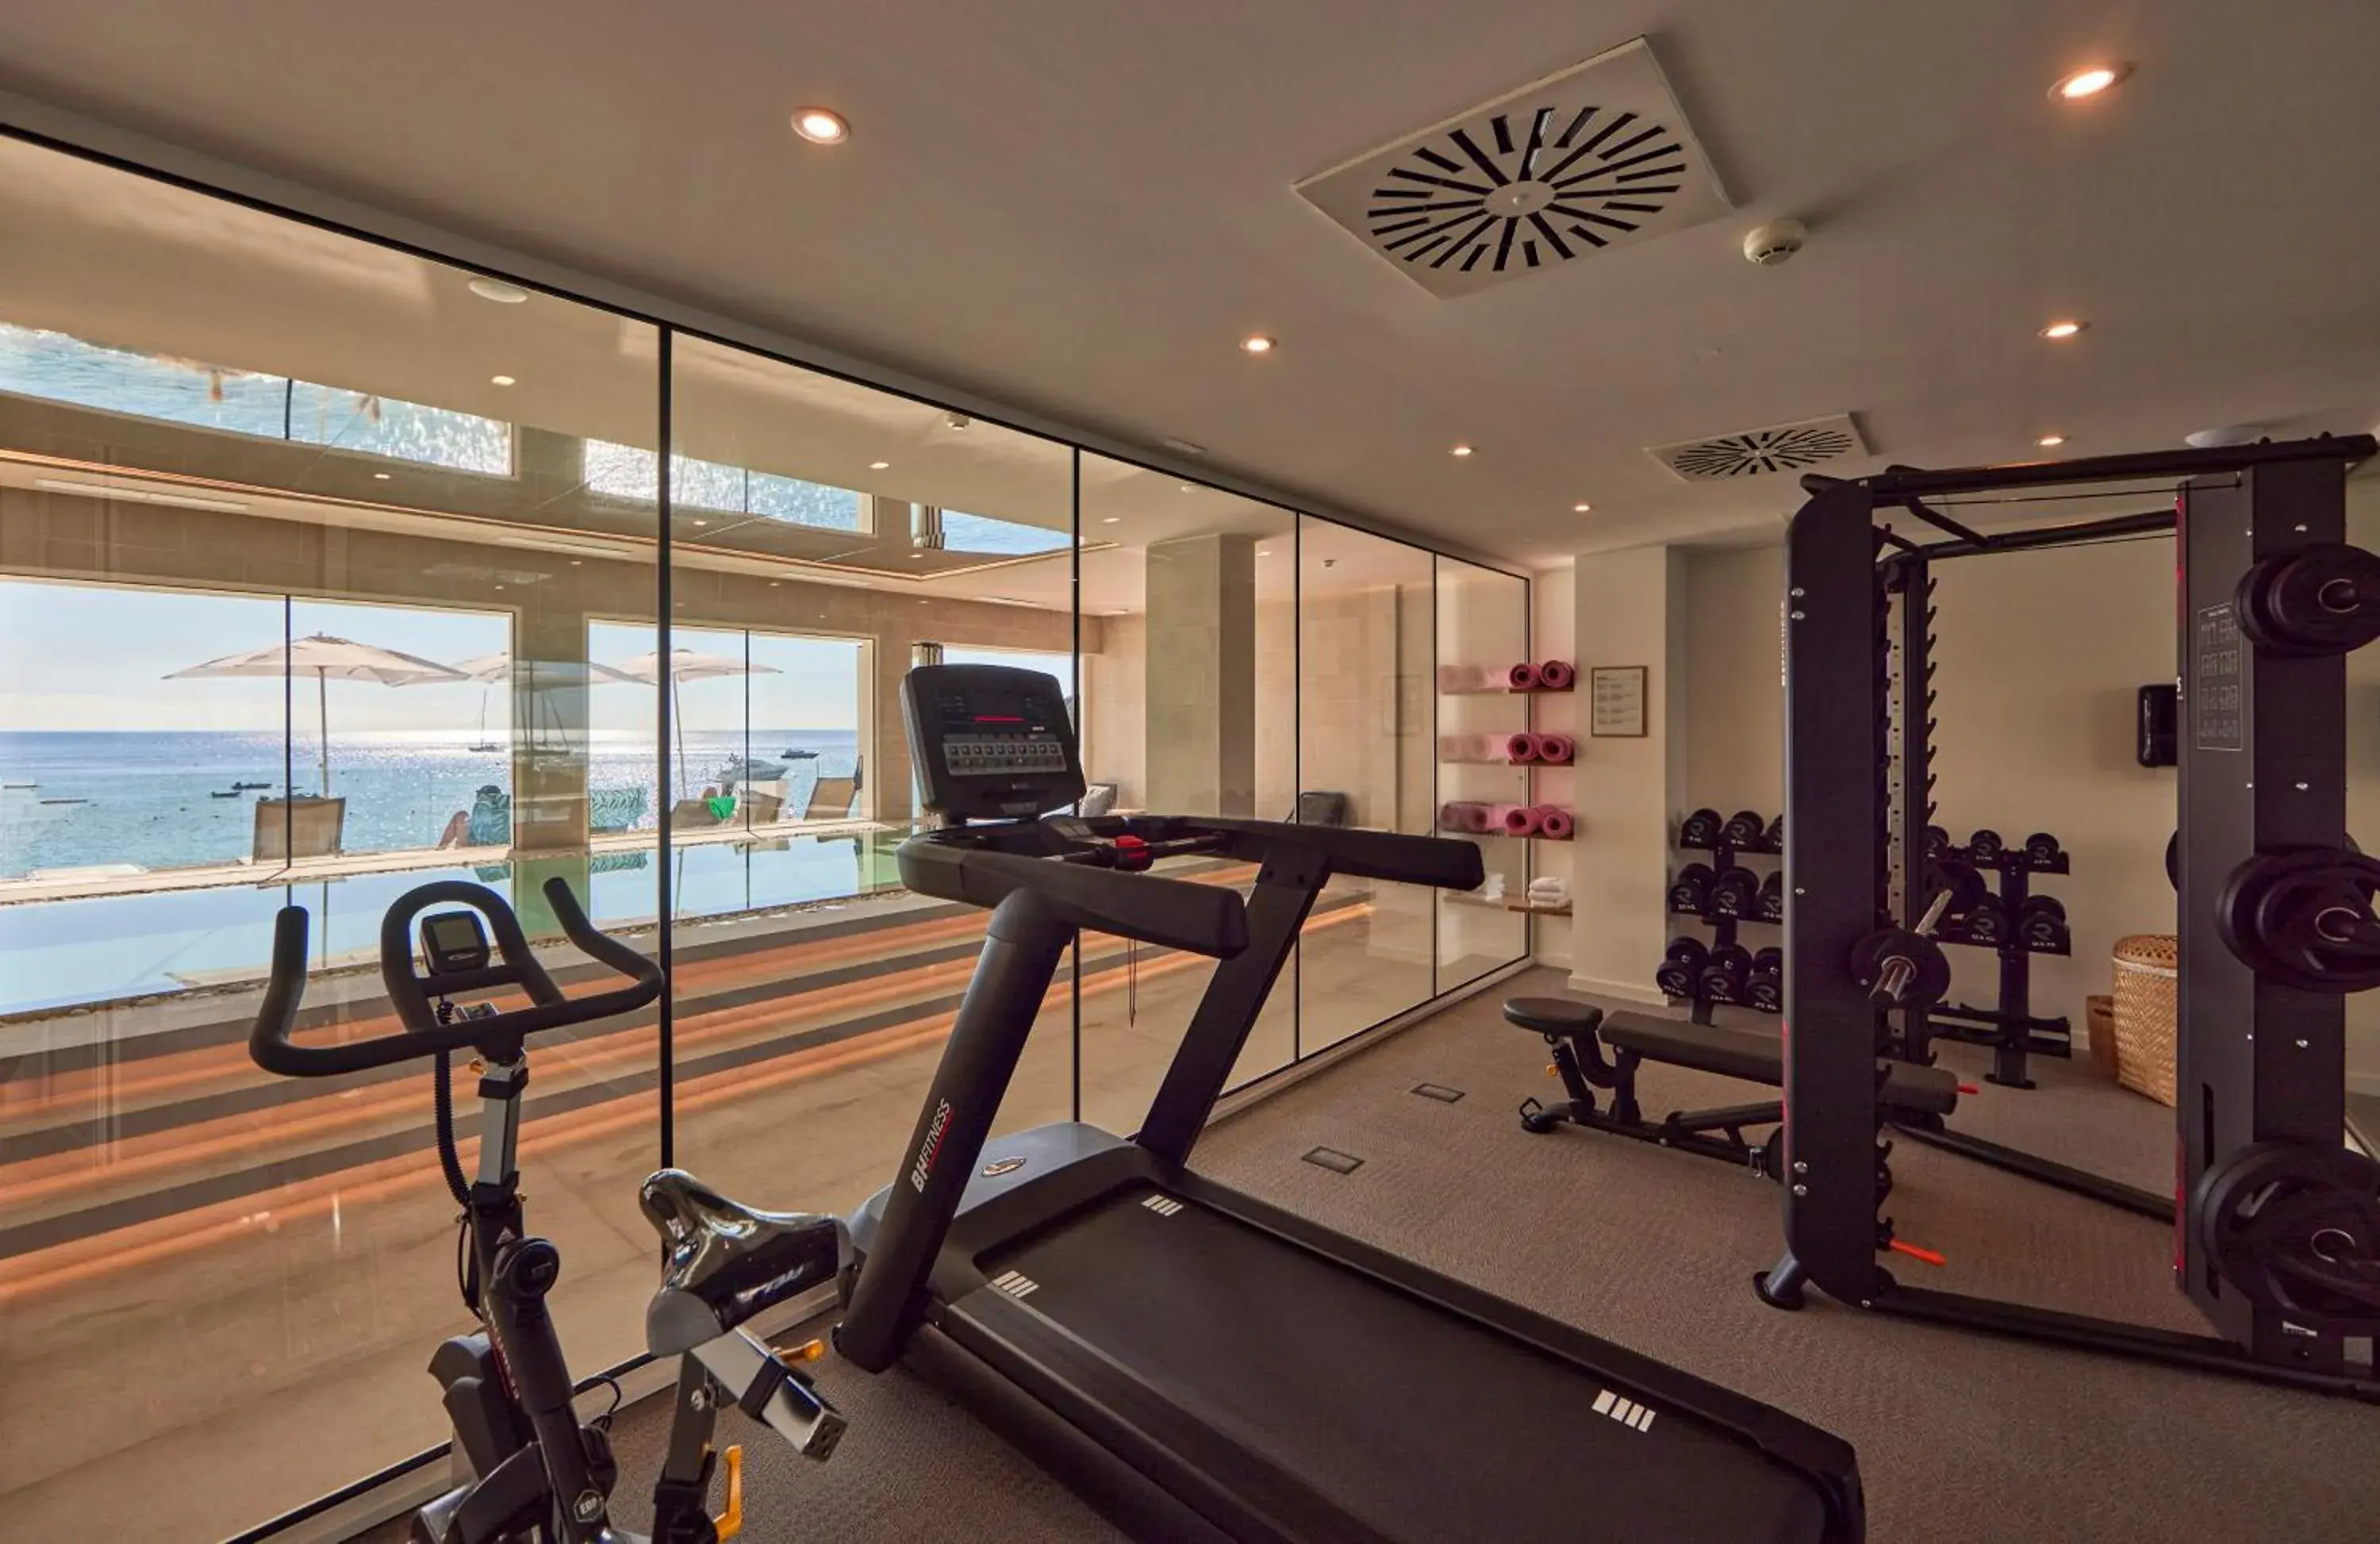 Fitness centre/facilities, Fitness Center/Facilities in Universal Hotel Aquamarin